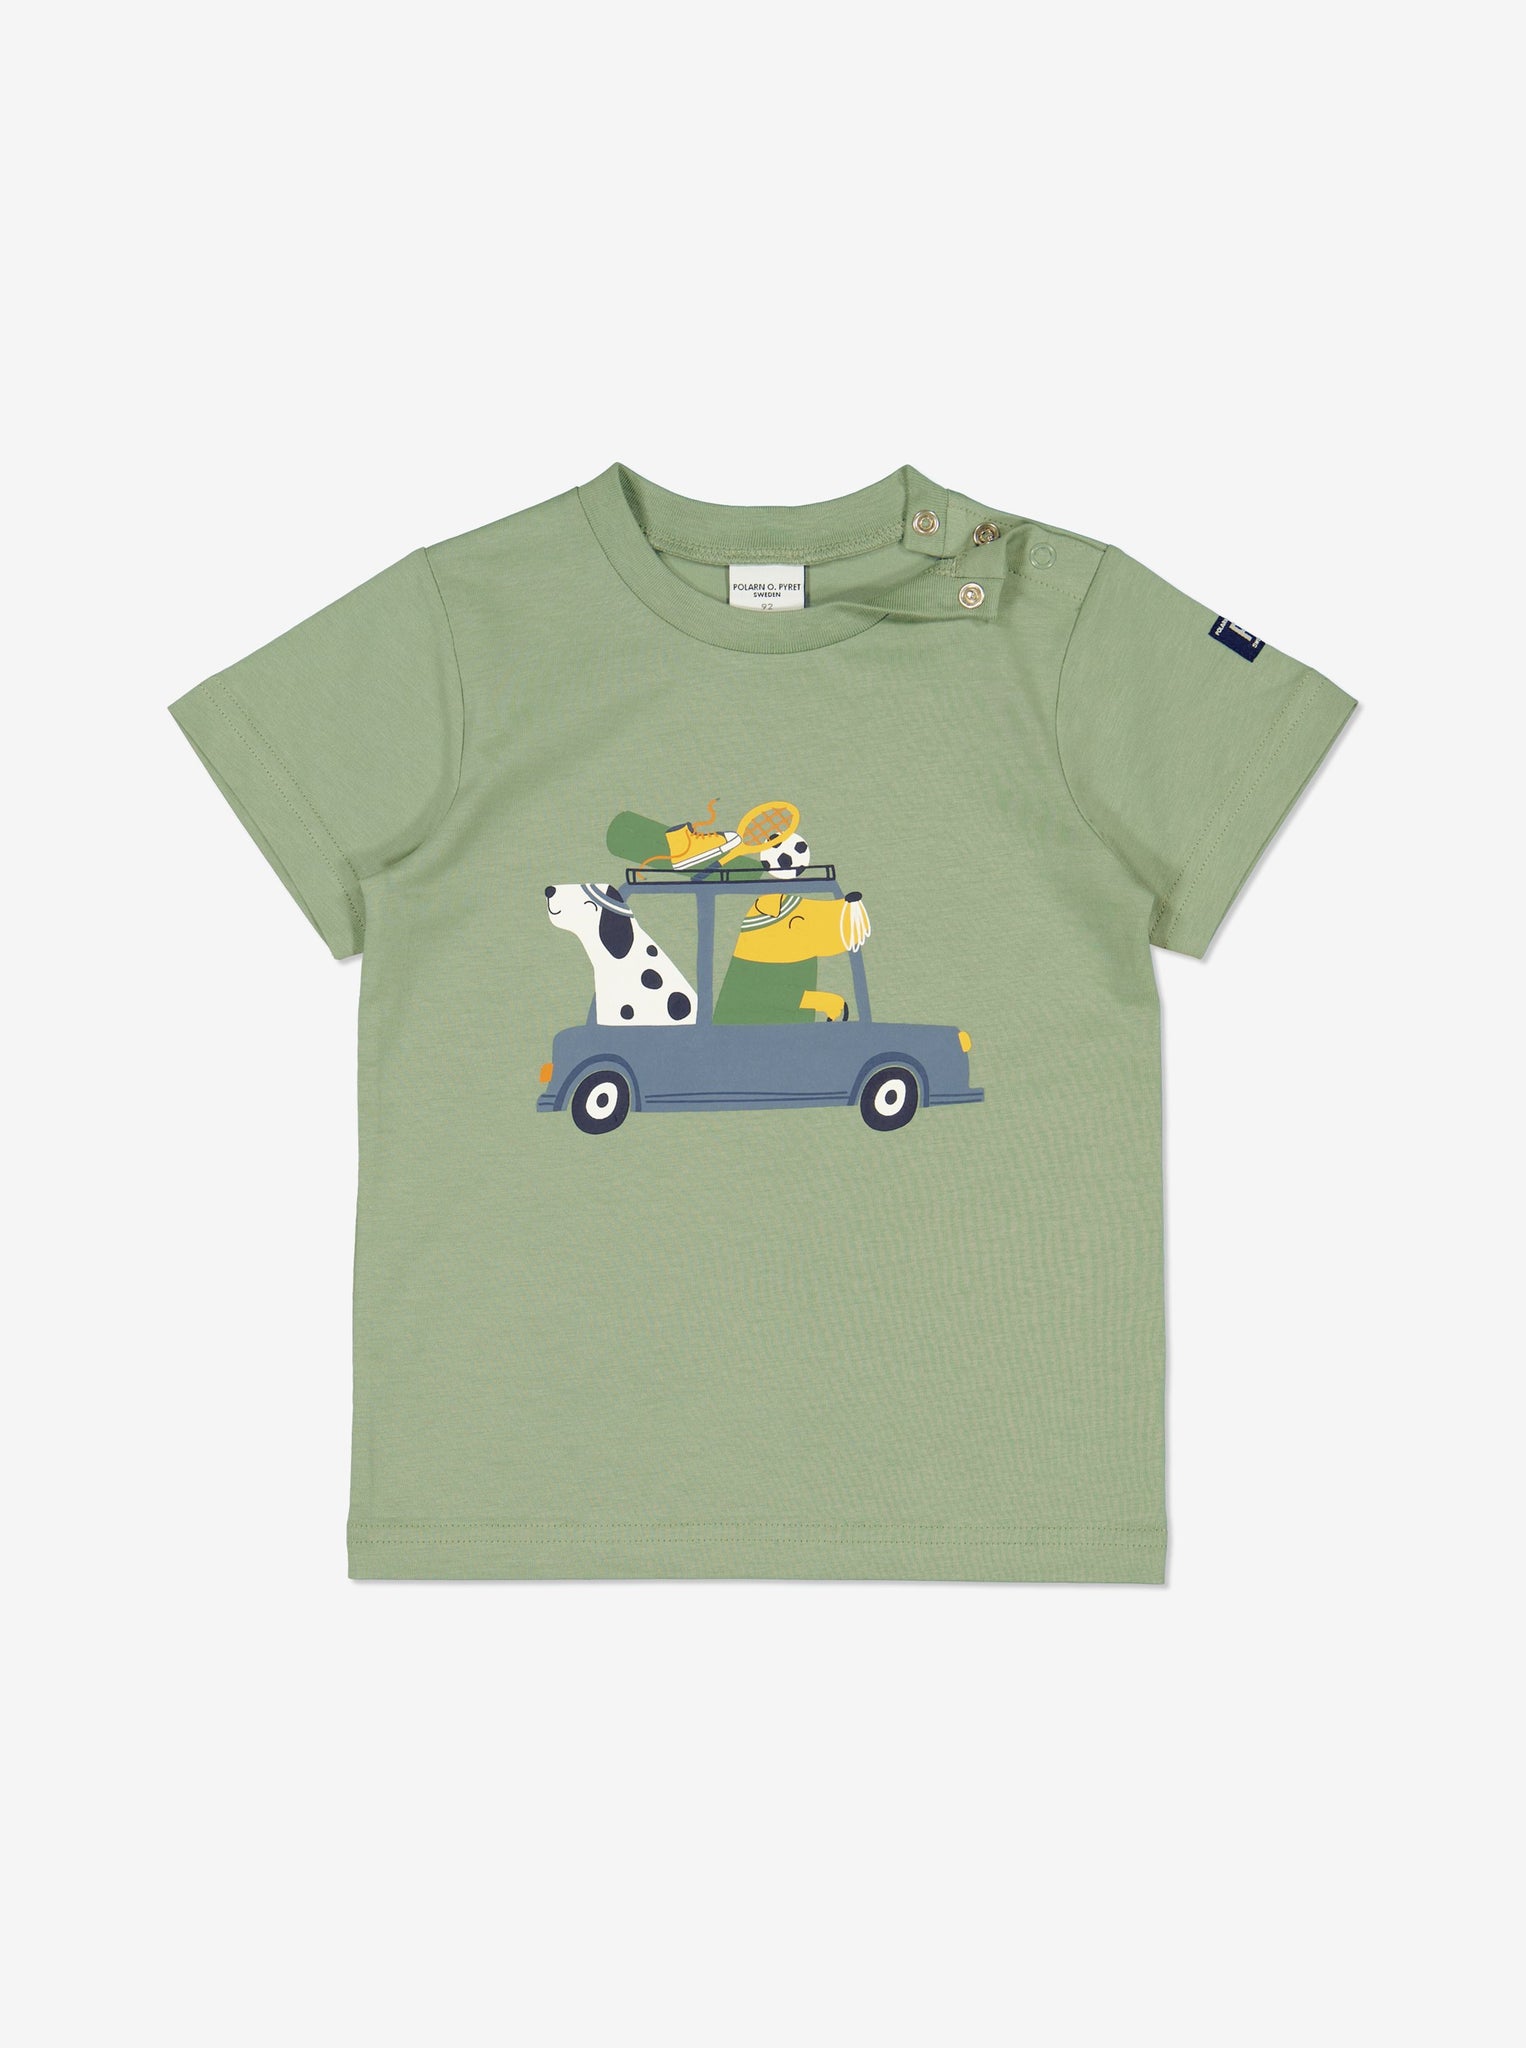  Organic Green Animal Print Kids T-Shirt from Polarn O. Pyret Kidswear. Made with 100% organic cotton.